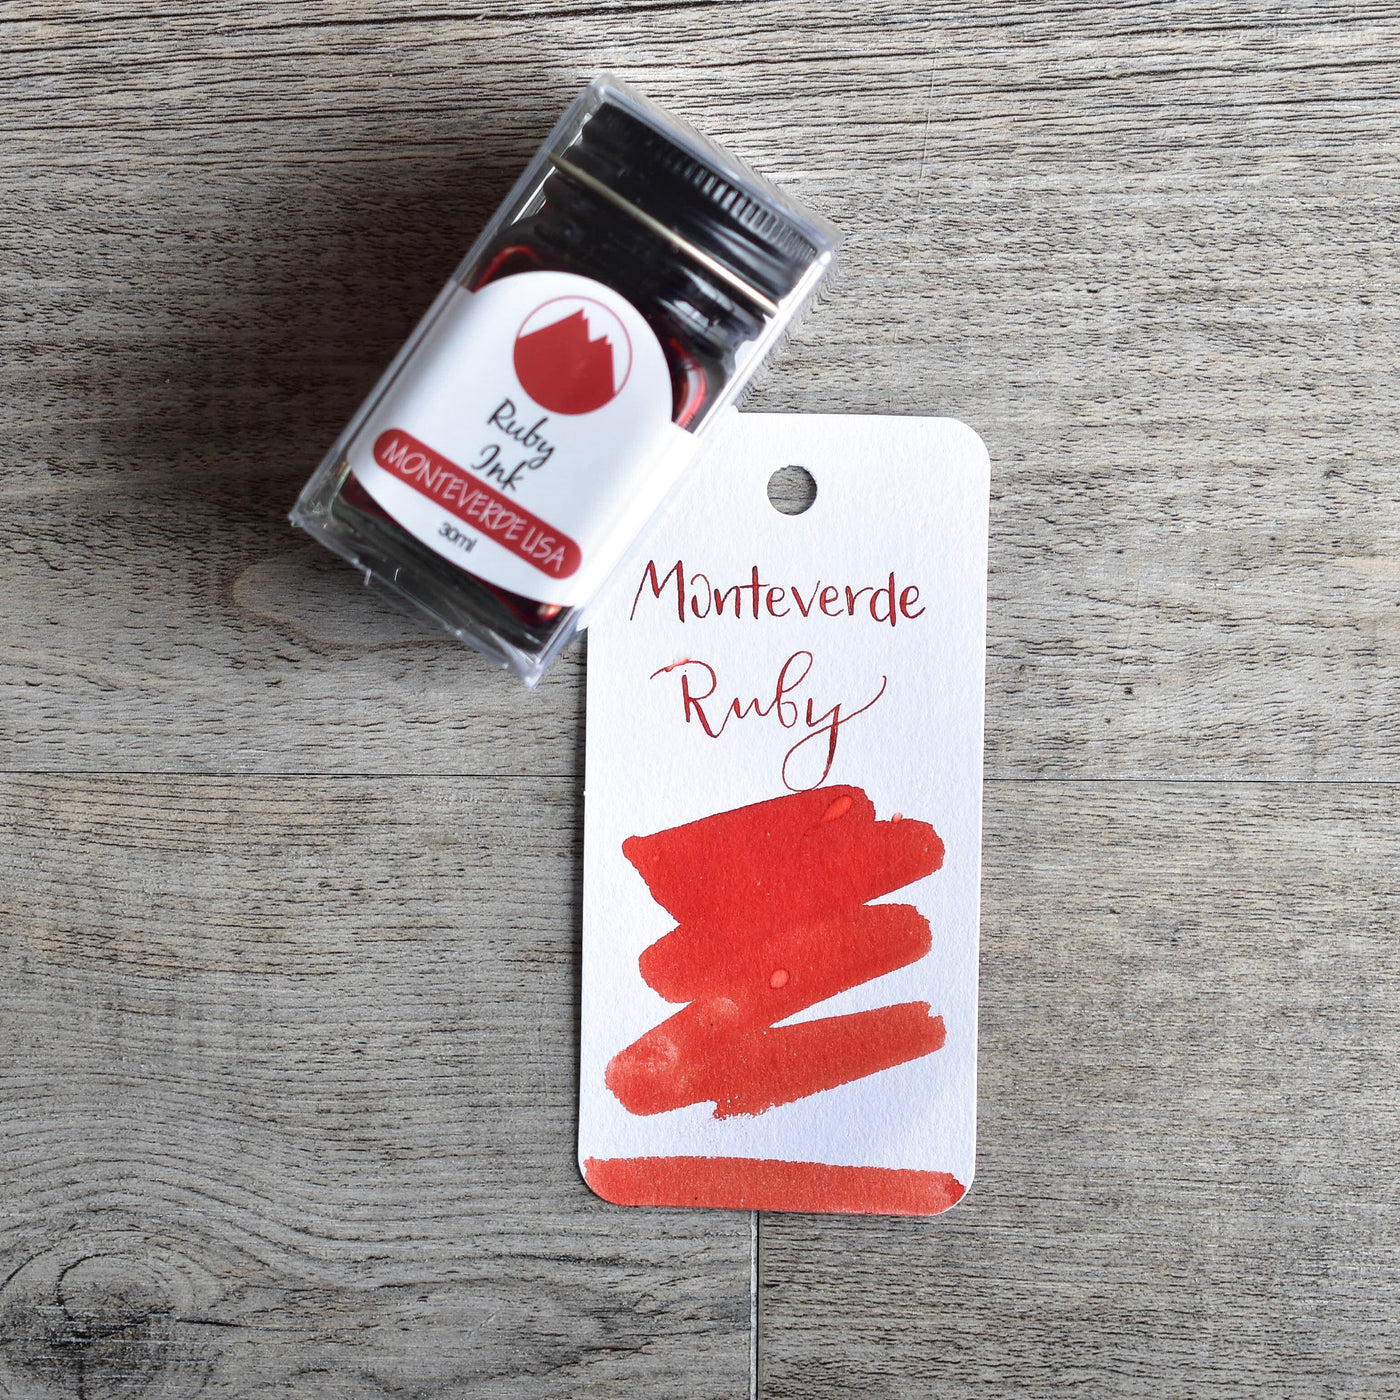 Monteverde Ruby Ink Bottle